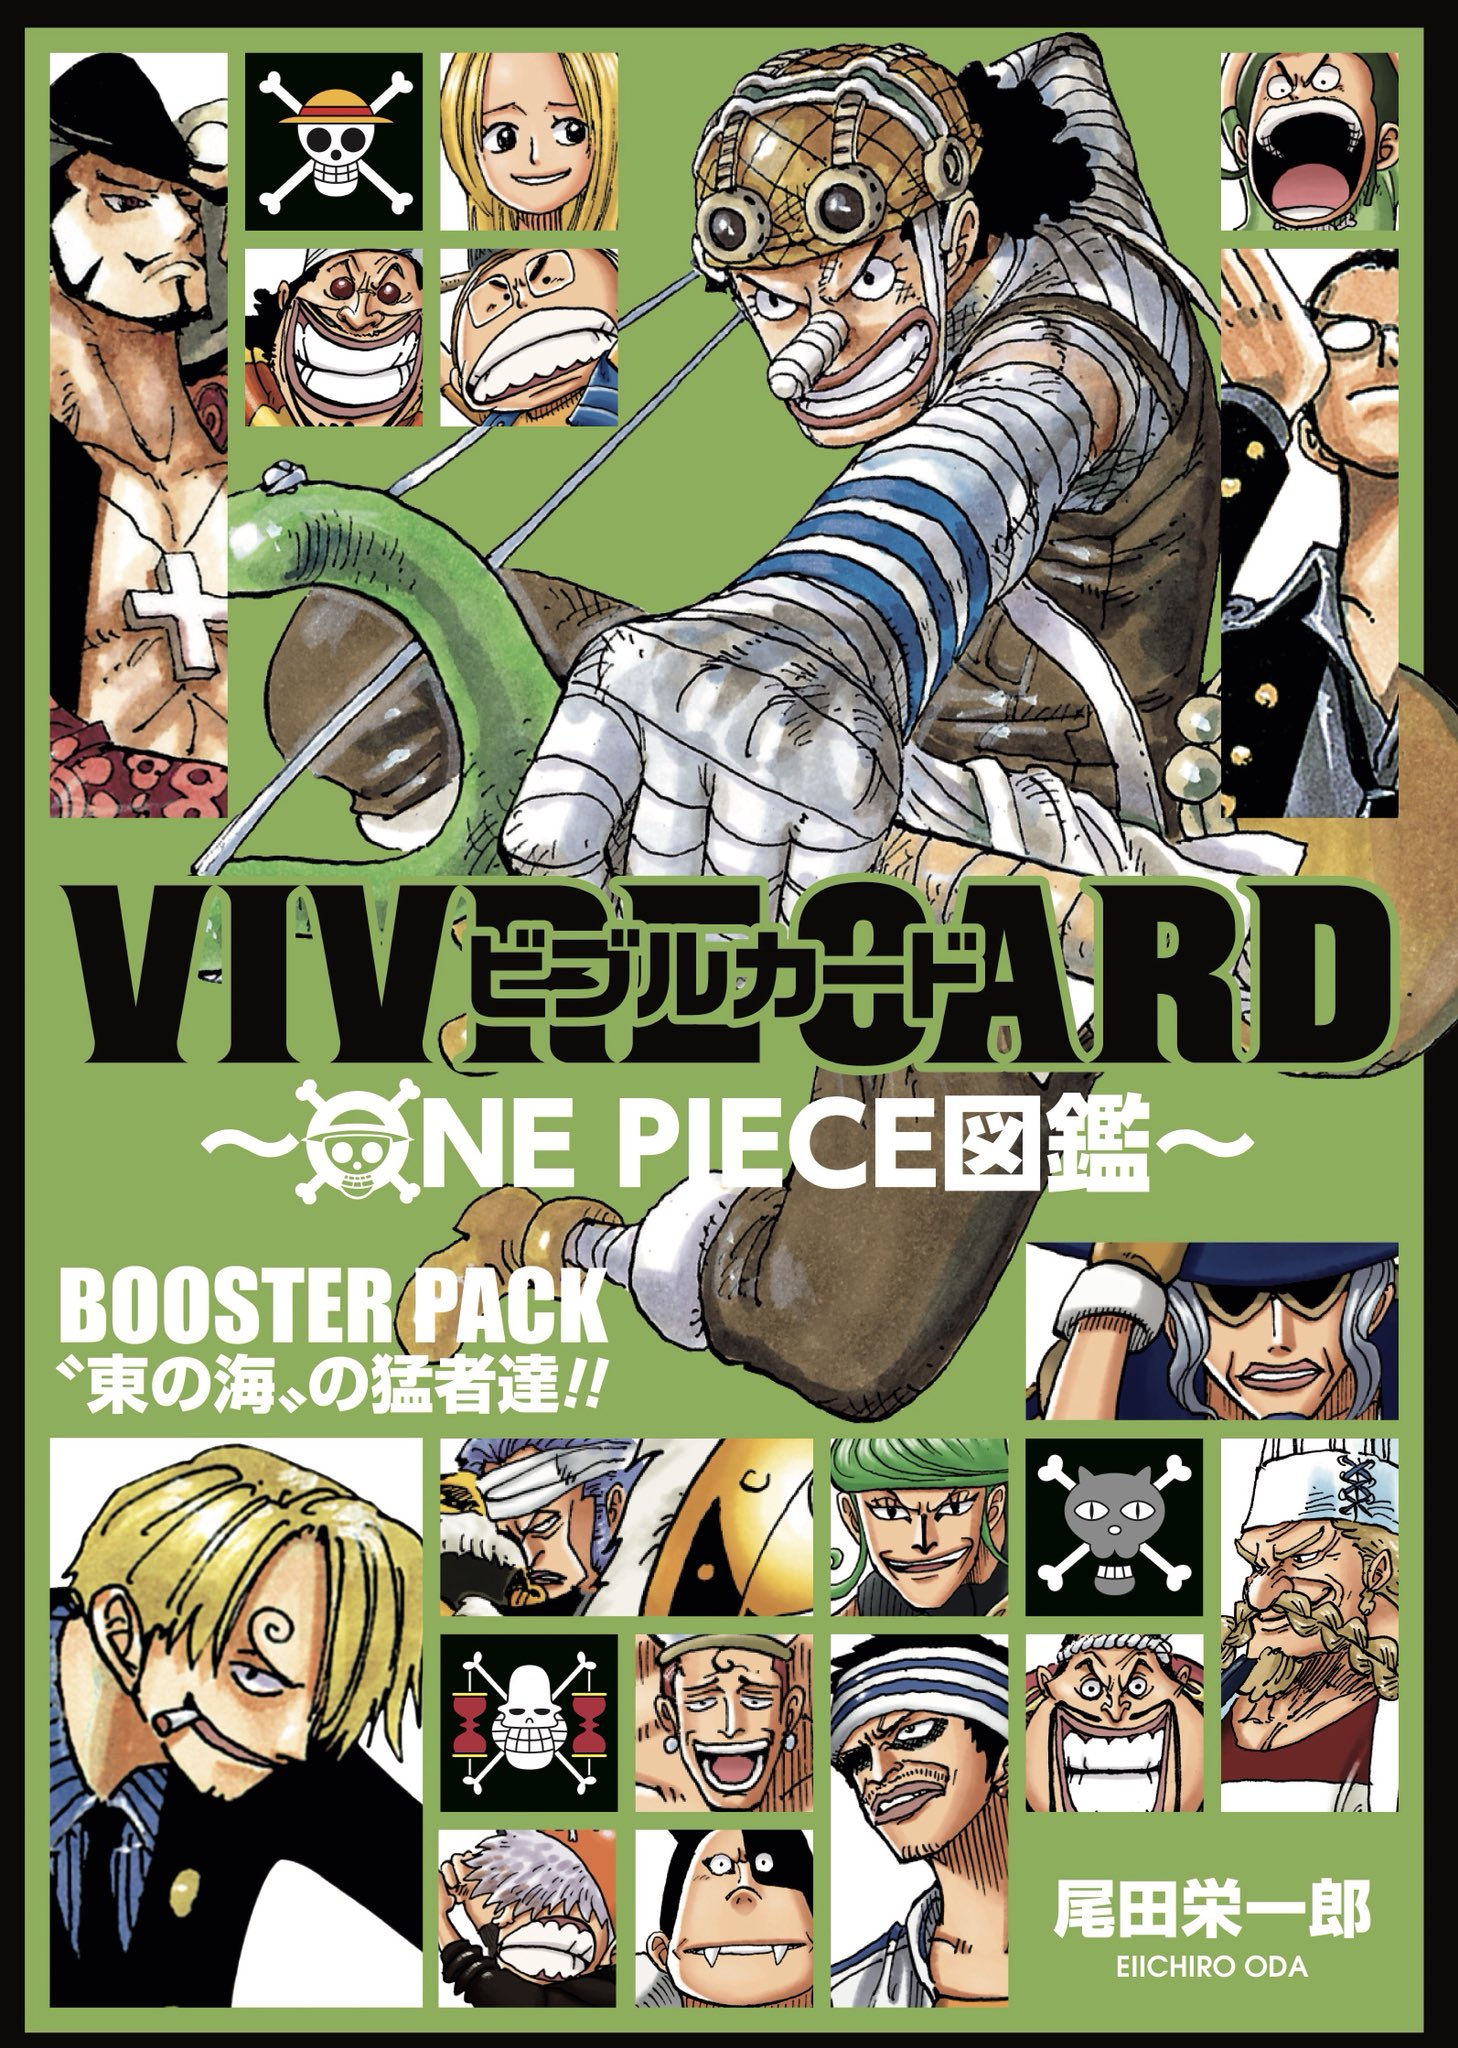 One Piece Vivre Card Onepiece Illustration Starter Vol 1 Vol 2 Set Japan New Japanese Anime Collectibles